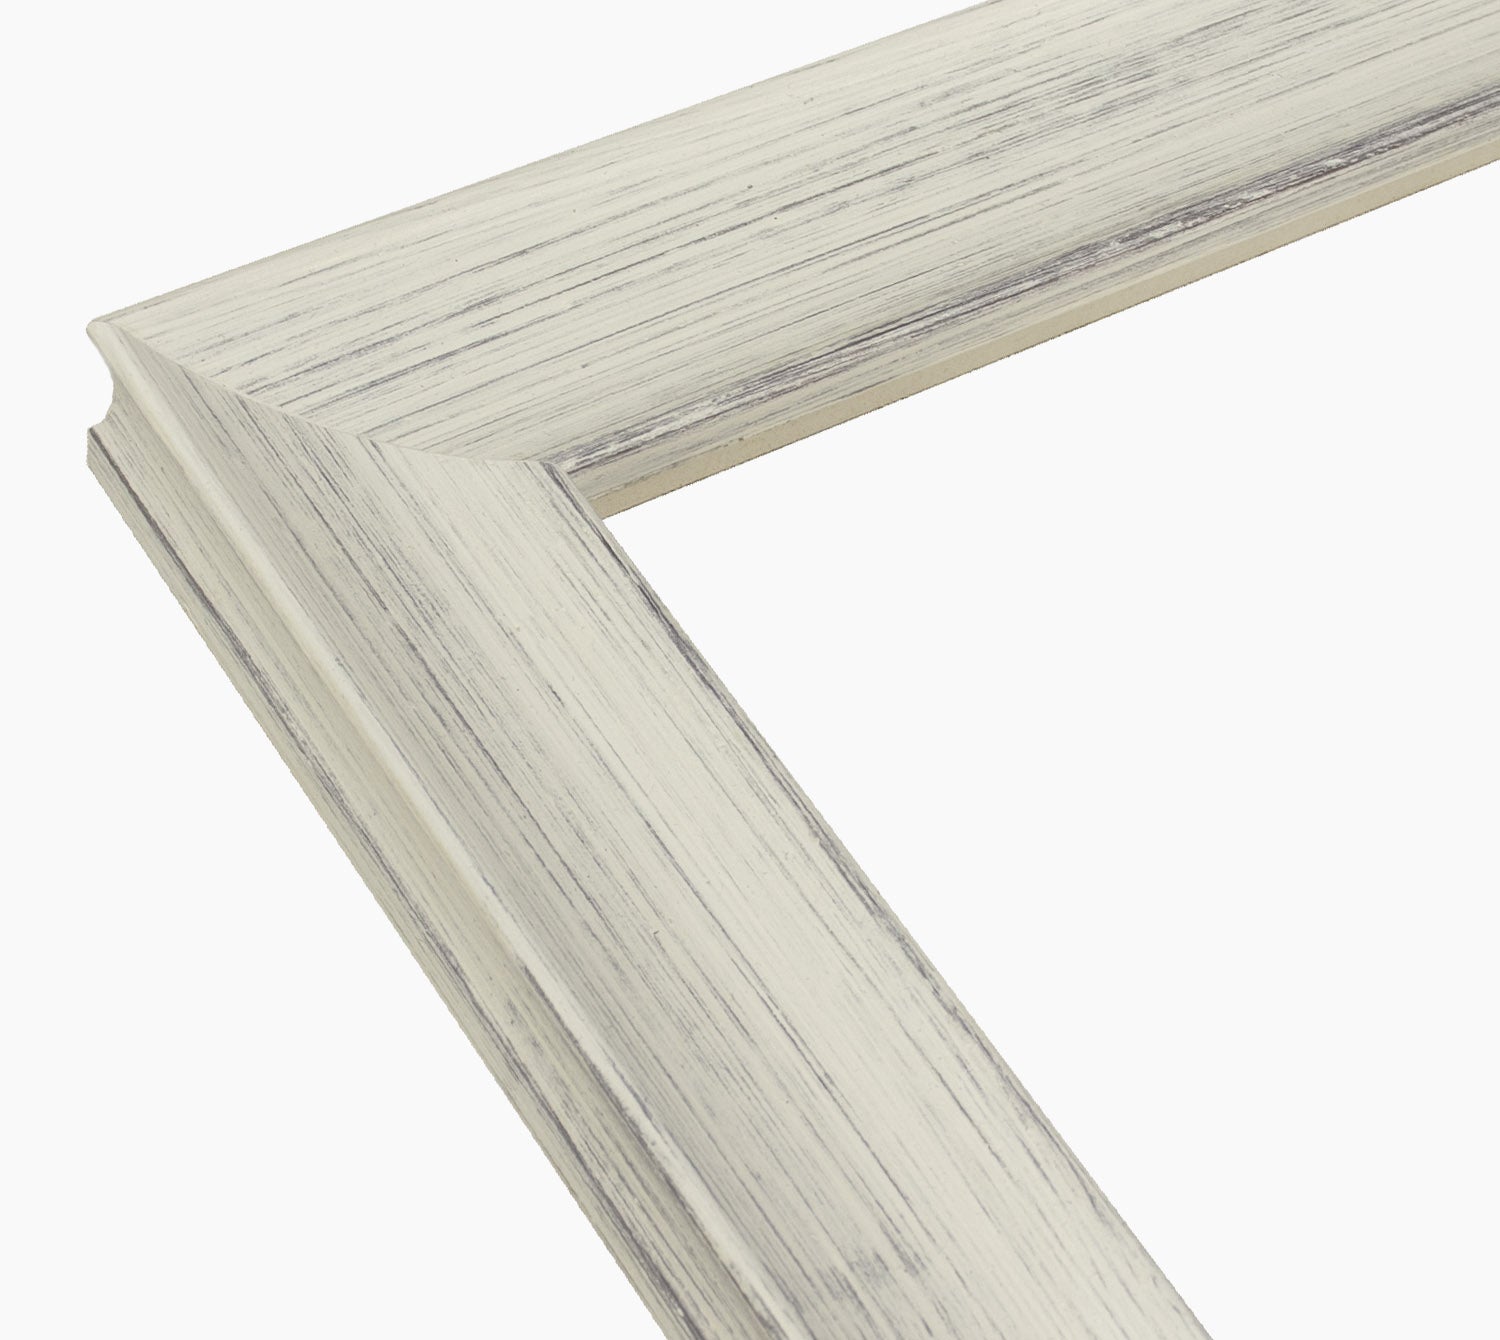 298.920 cadre en bois blanc avec fond marron mesure de profil 45x30 mm Lombarda cornici S.n.c.